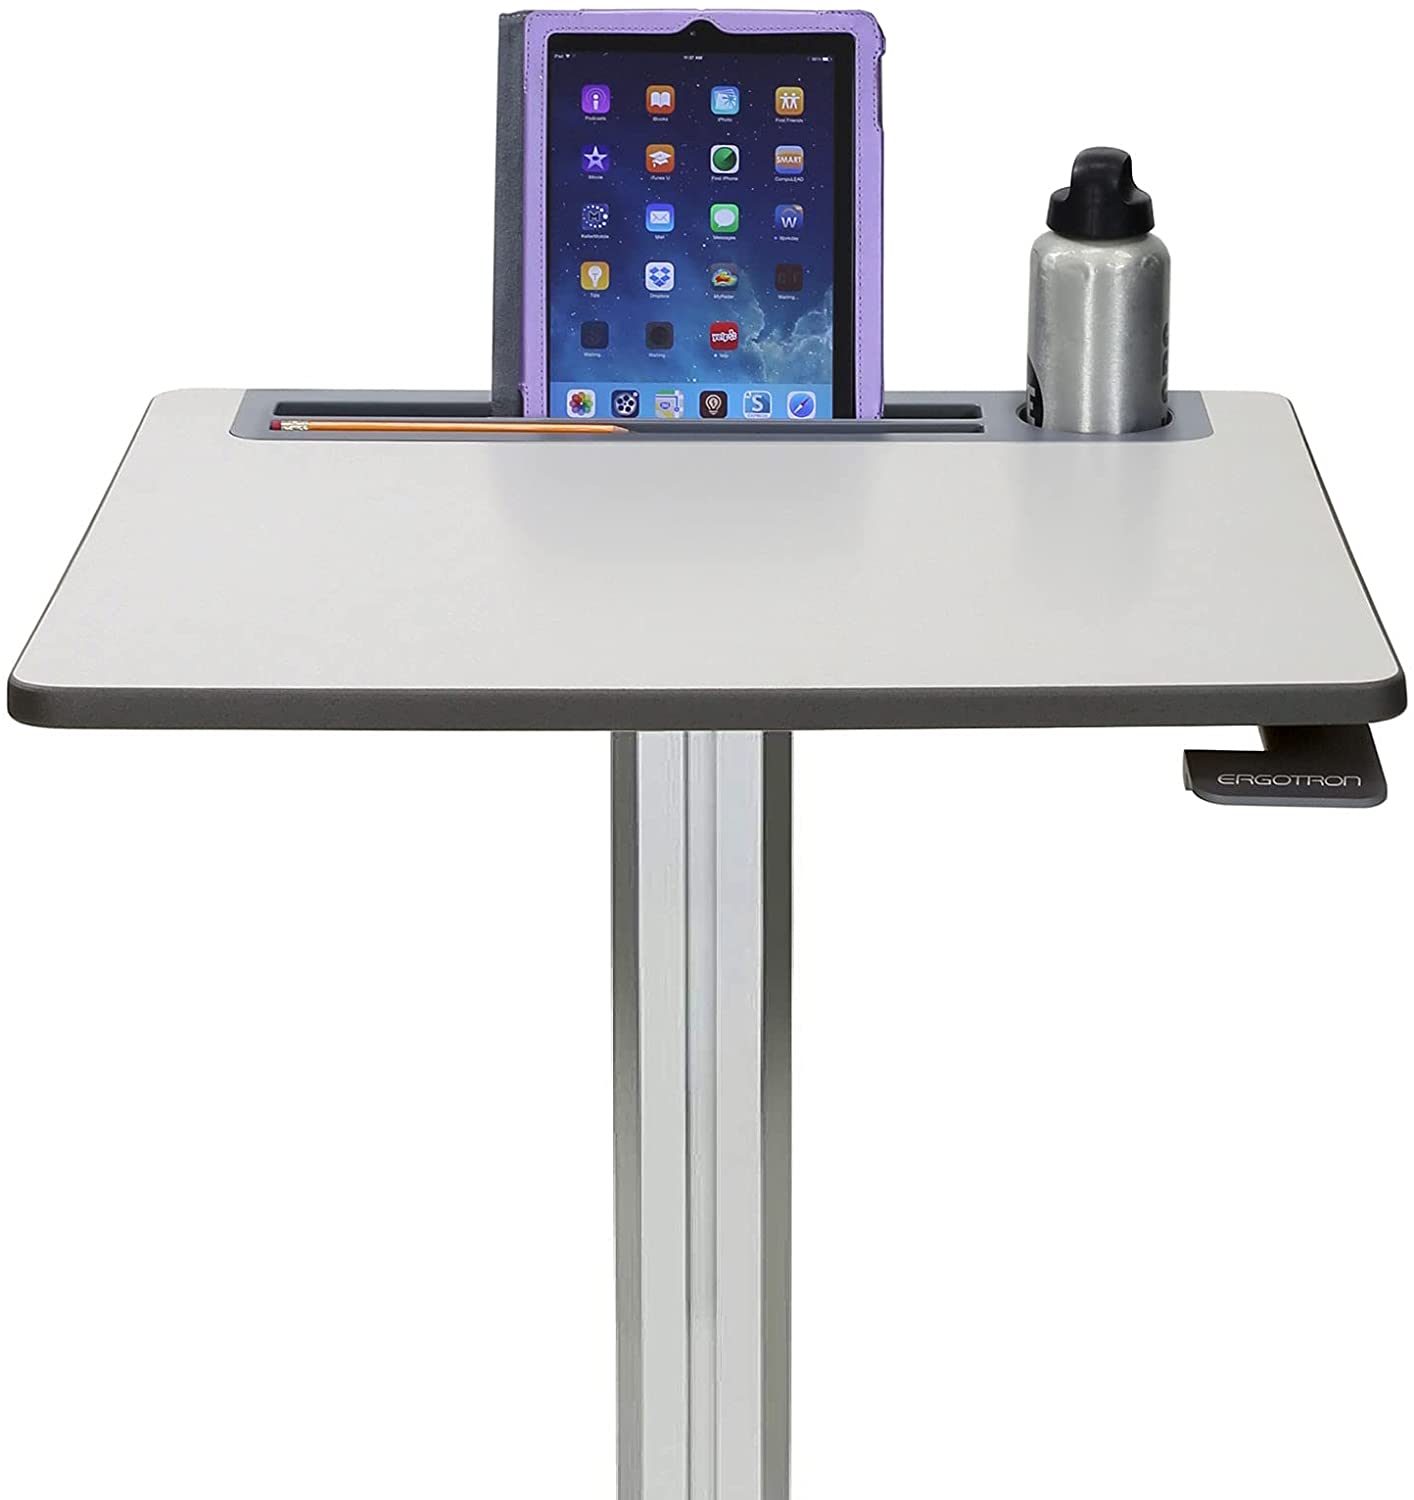 Ergotron LearnFit BIFMA-Certified Mobile Sit-Stand Desk